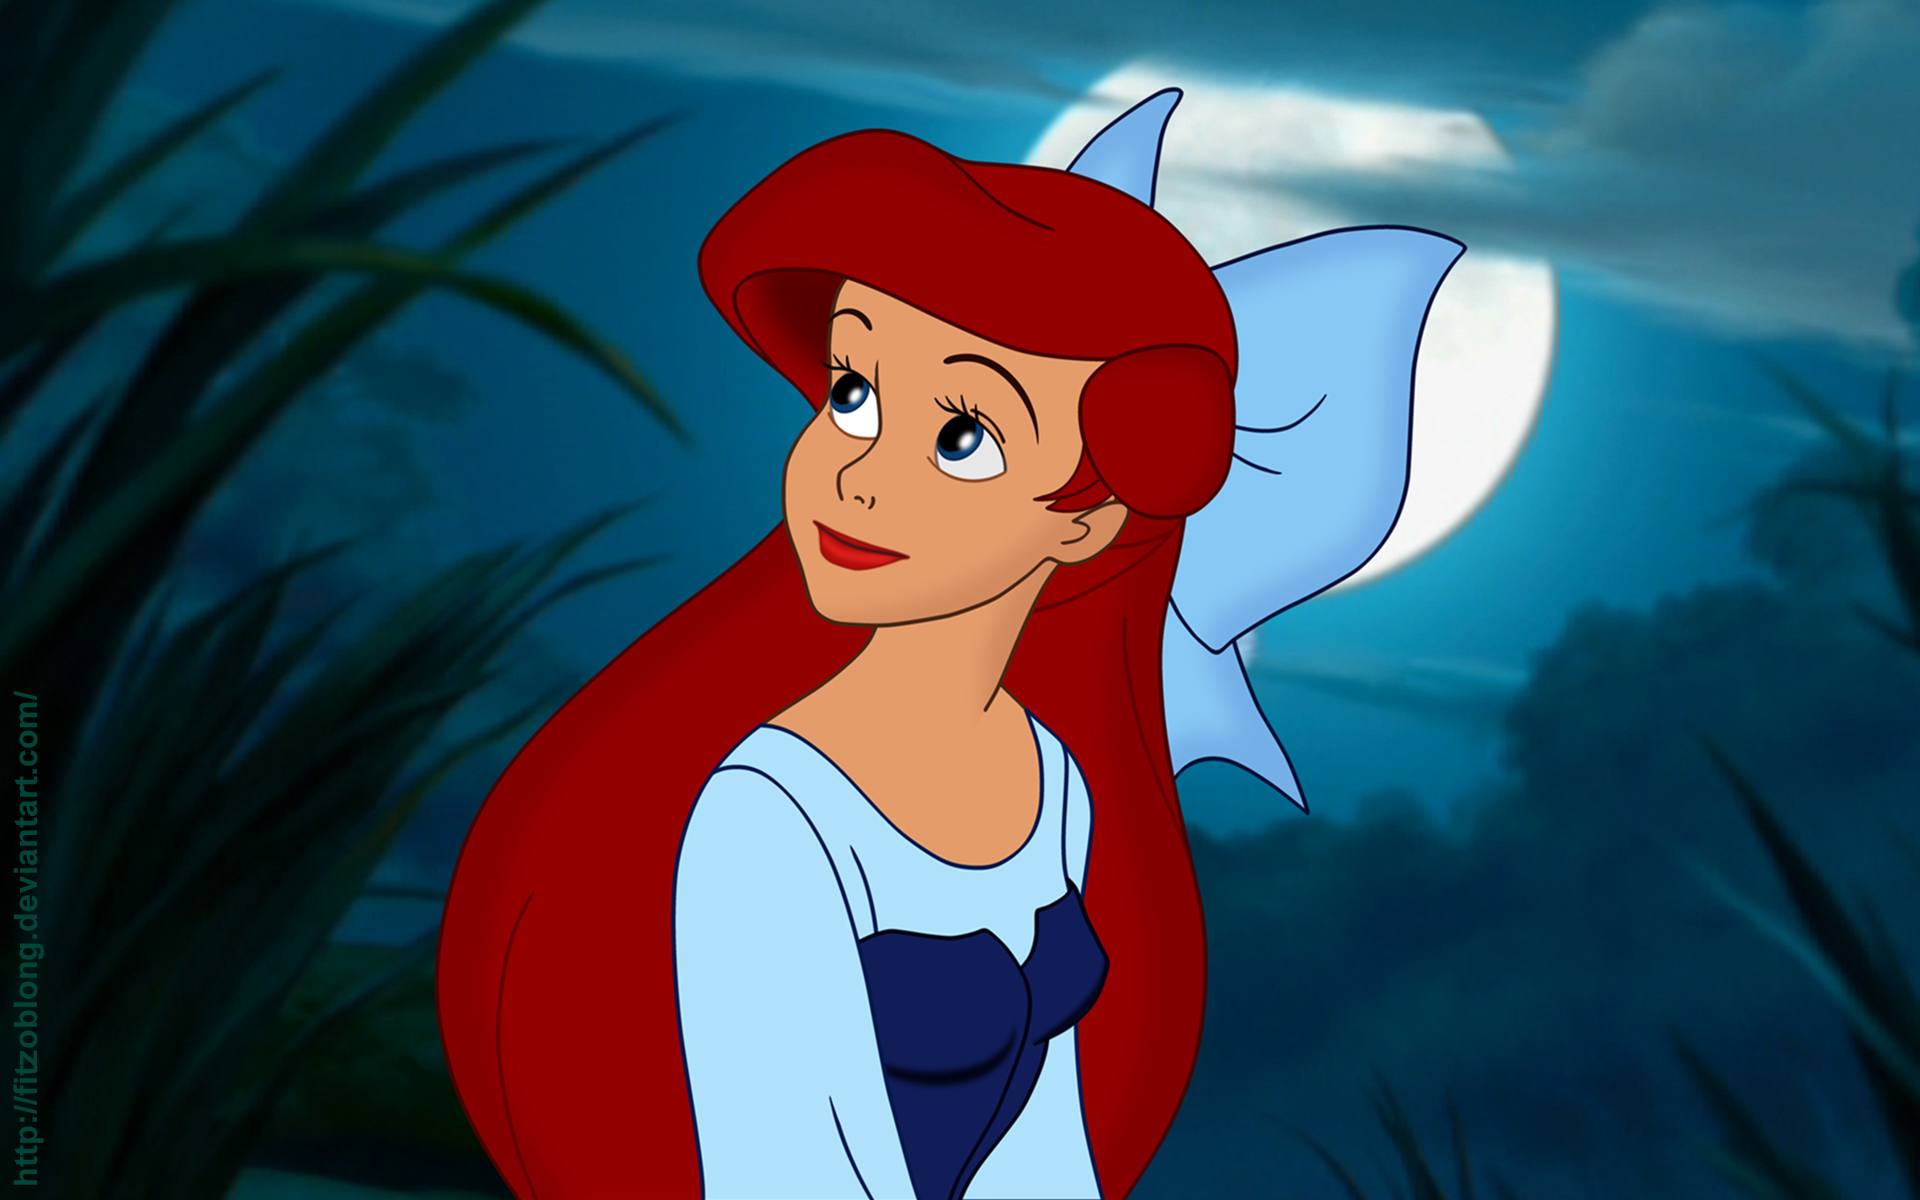 Blog Post 7: Disney Princess Ariel